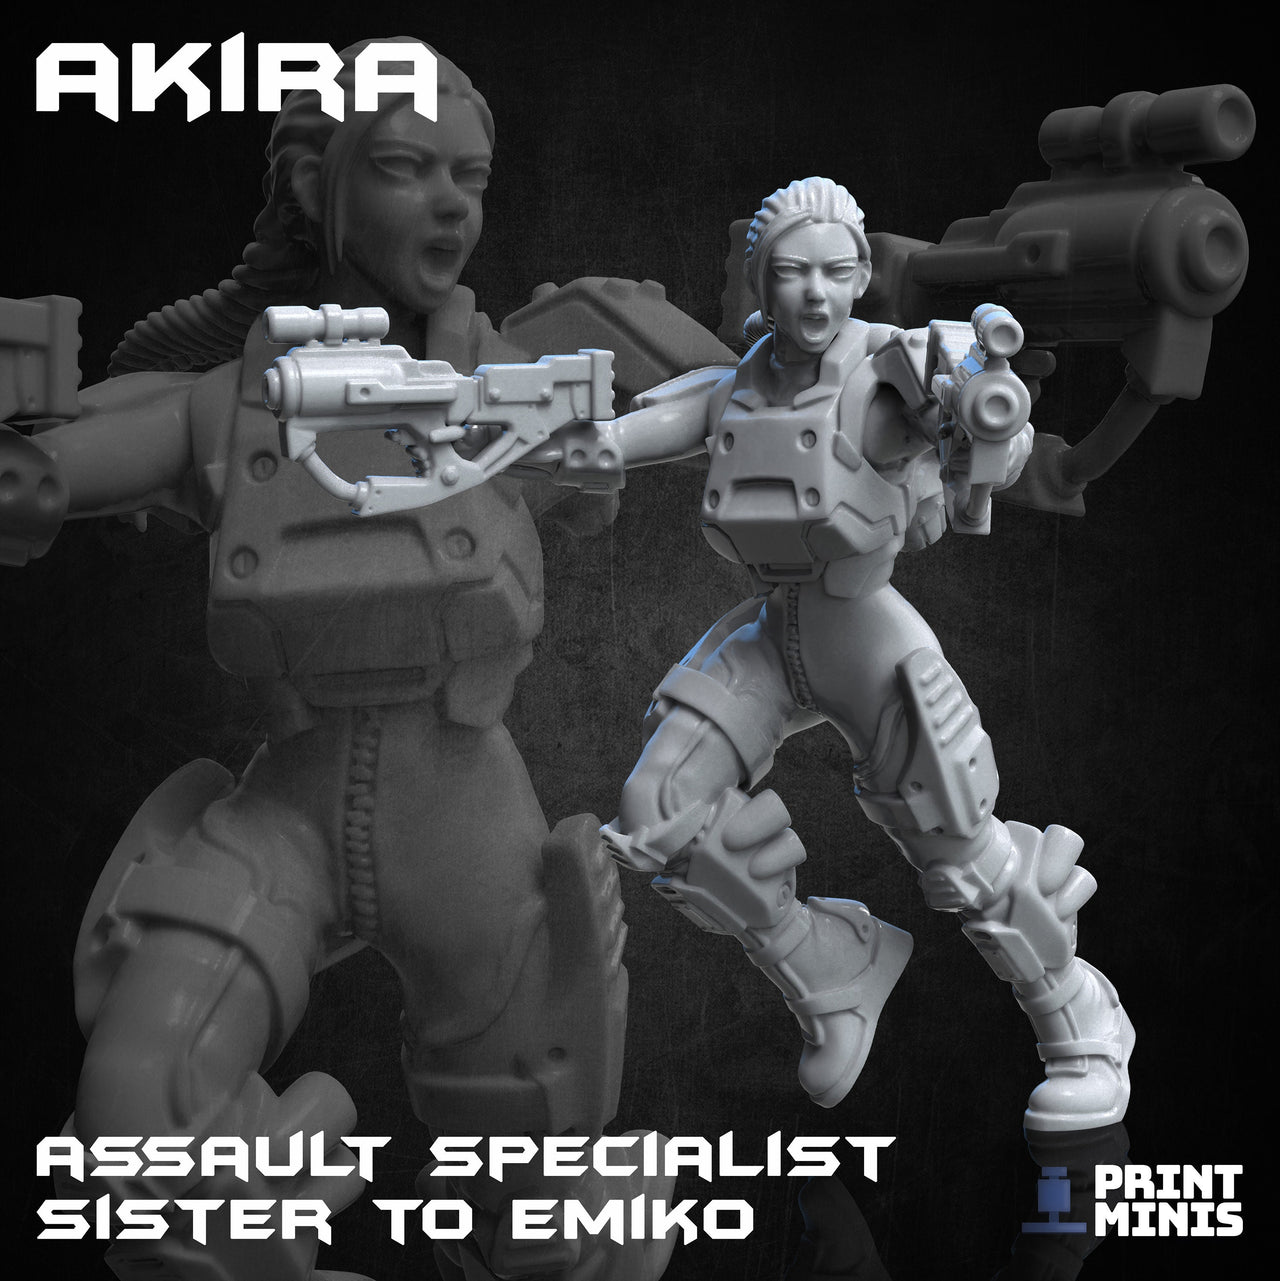 Akira, Assault Specialist - Print Minis | Sci Fi | Commando | Soldier